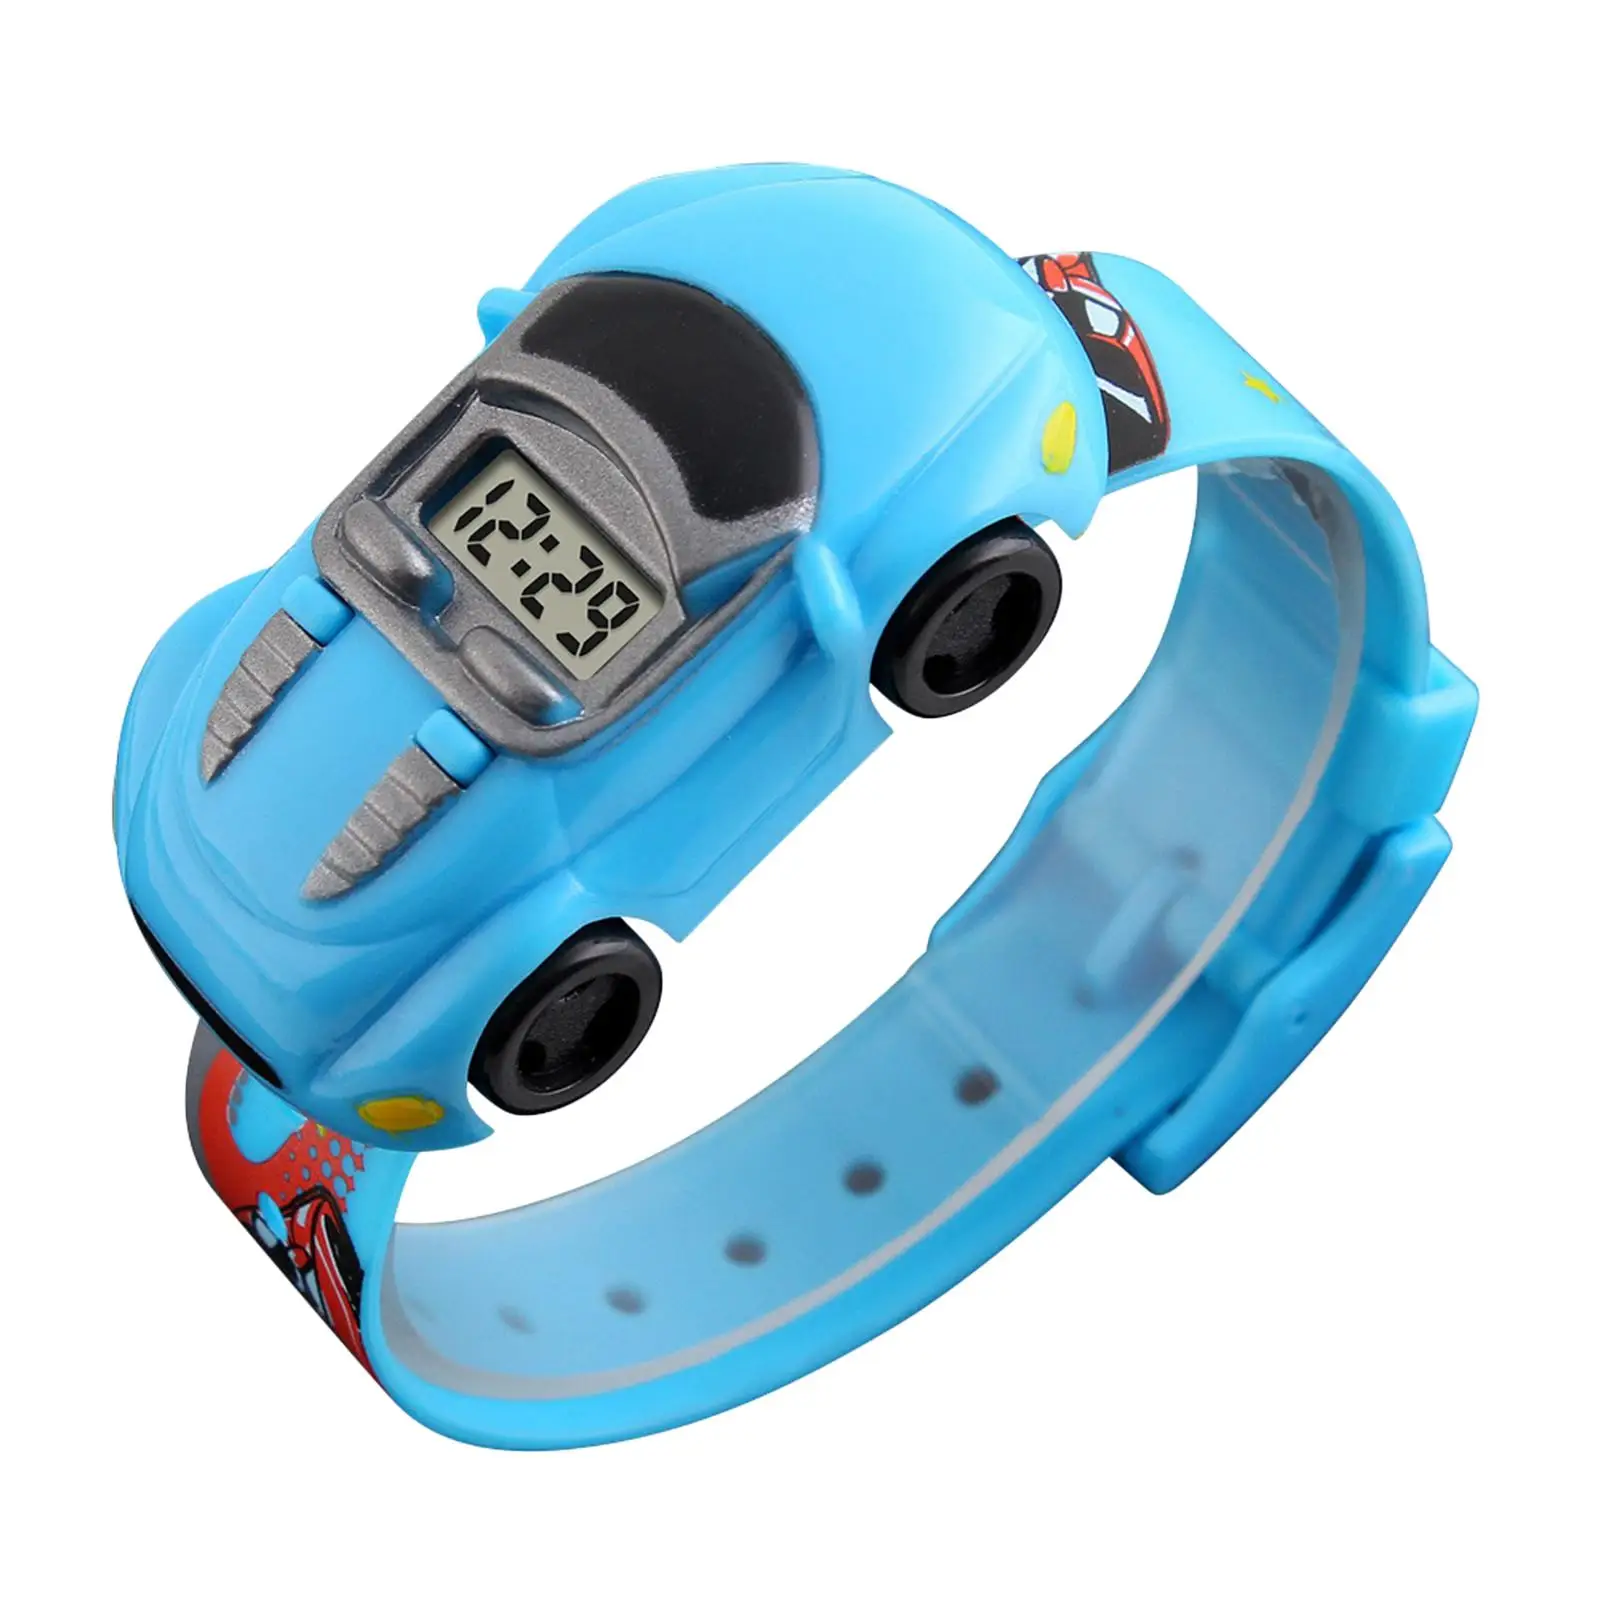 Kids Smart Watch for Boys Kids Toddler Smart Watch Toys for 5-10 Year Old Boys Kids Smartwatch Gifts for Kids Children